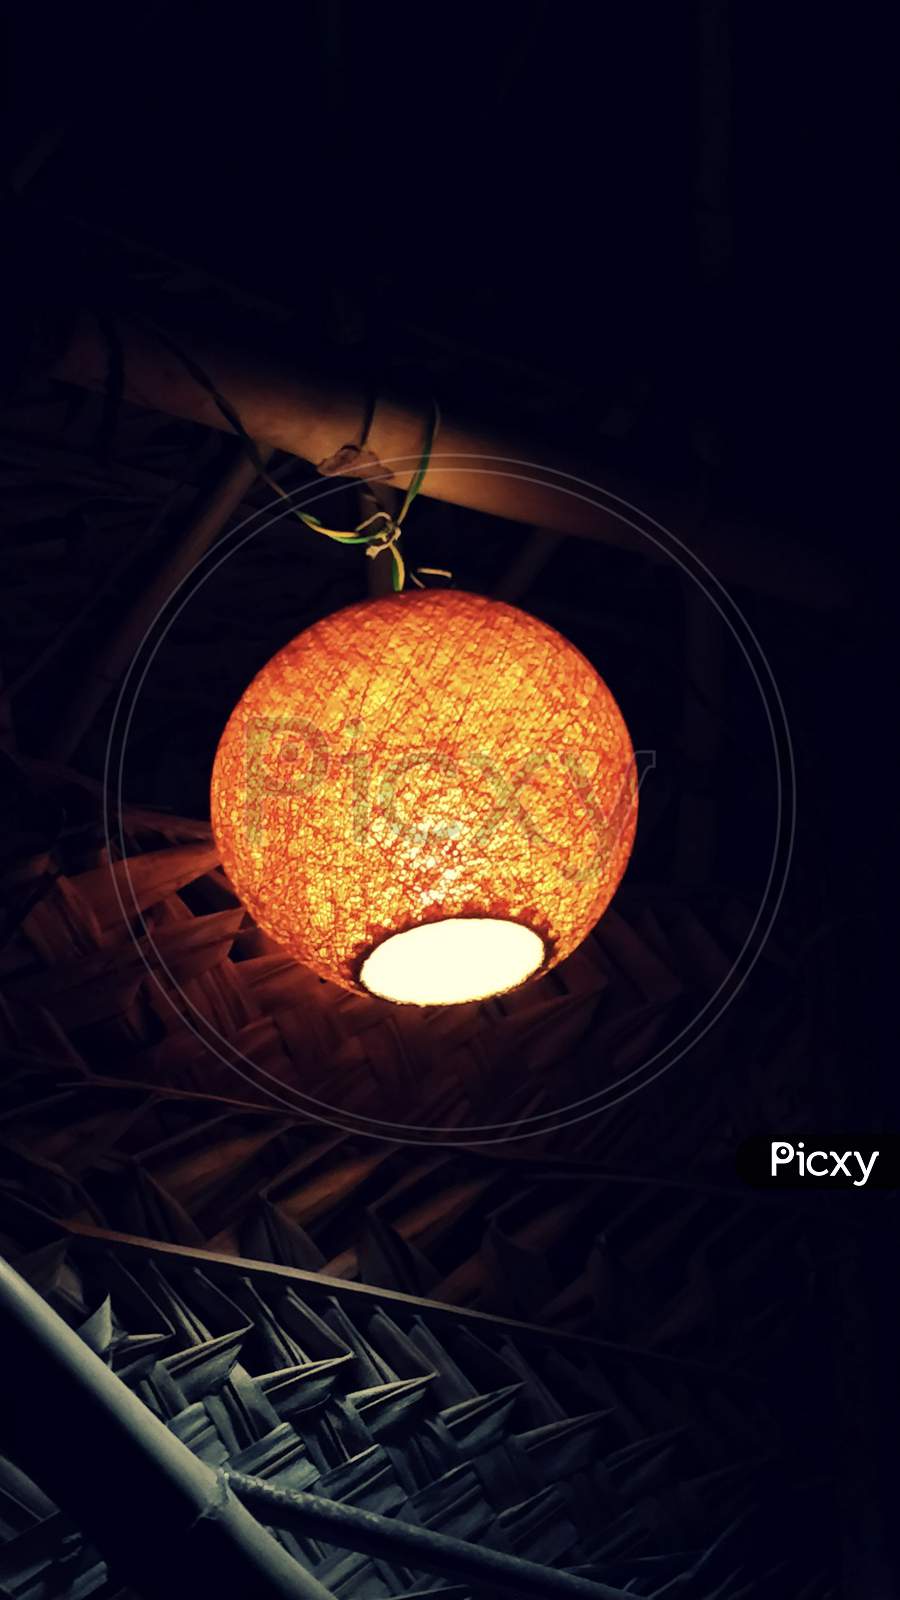 An orange night lamp